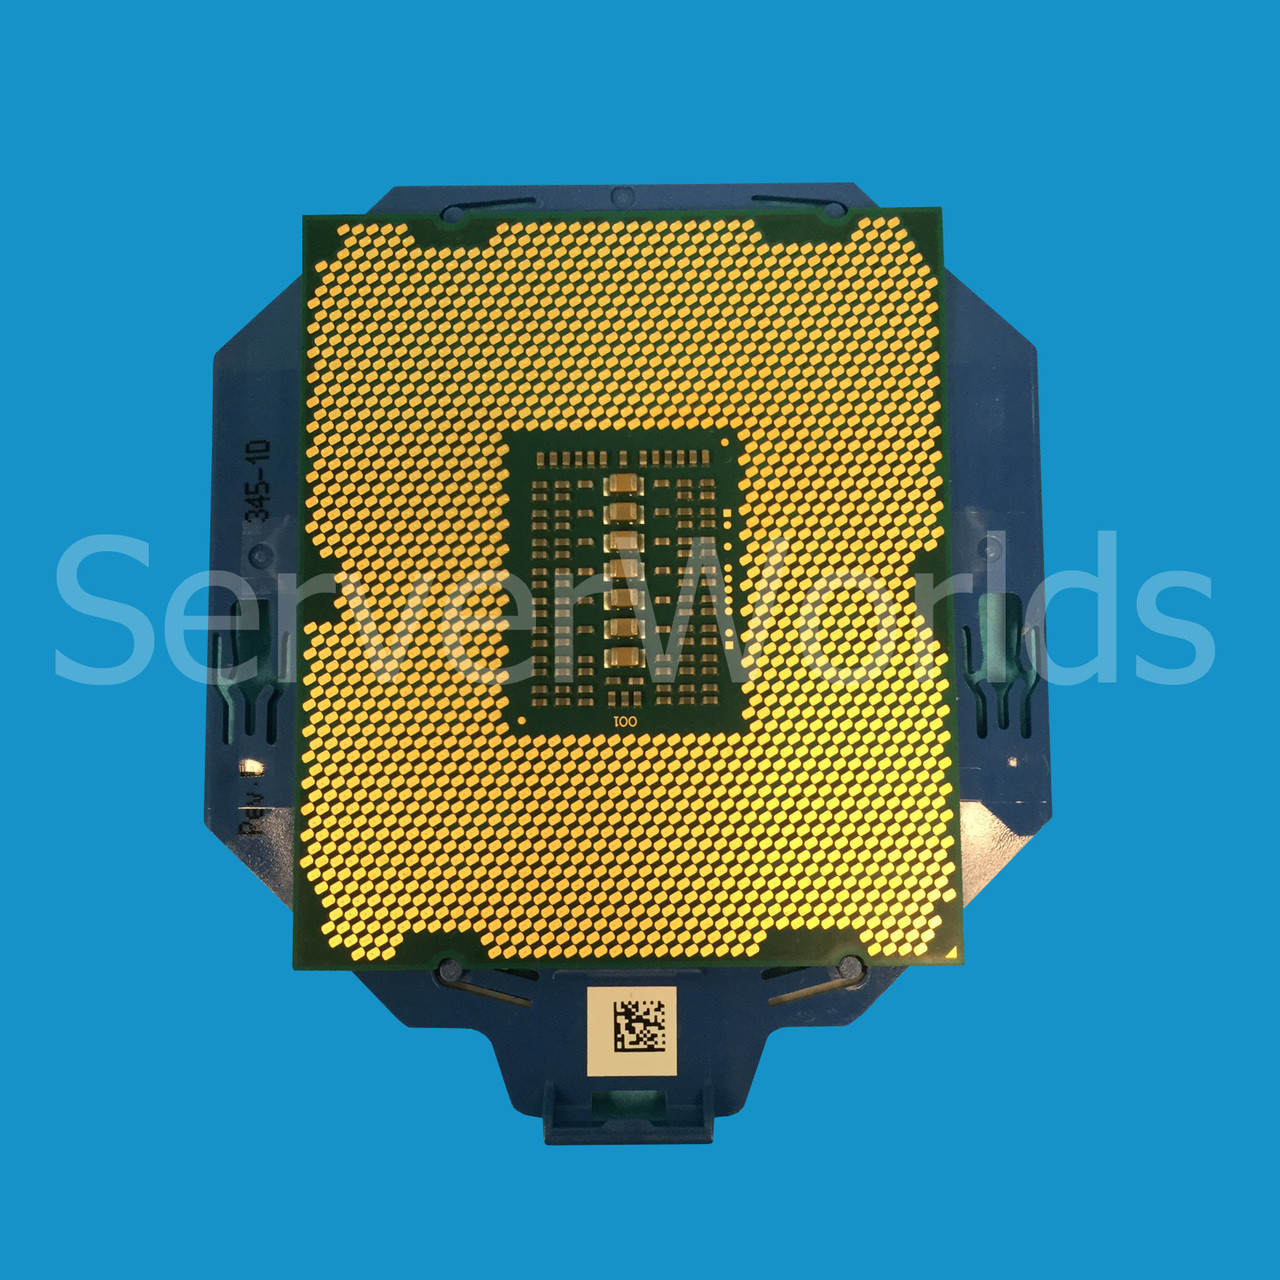 Refurbished Intel SR19R E5-4640V2 10C Processor Bottom View